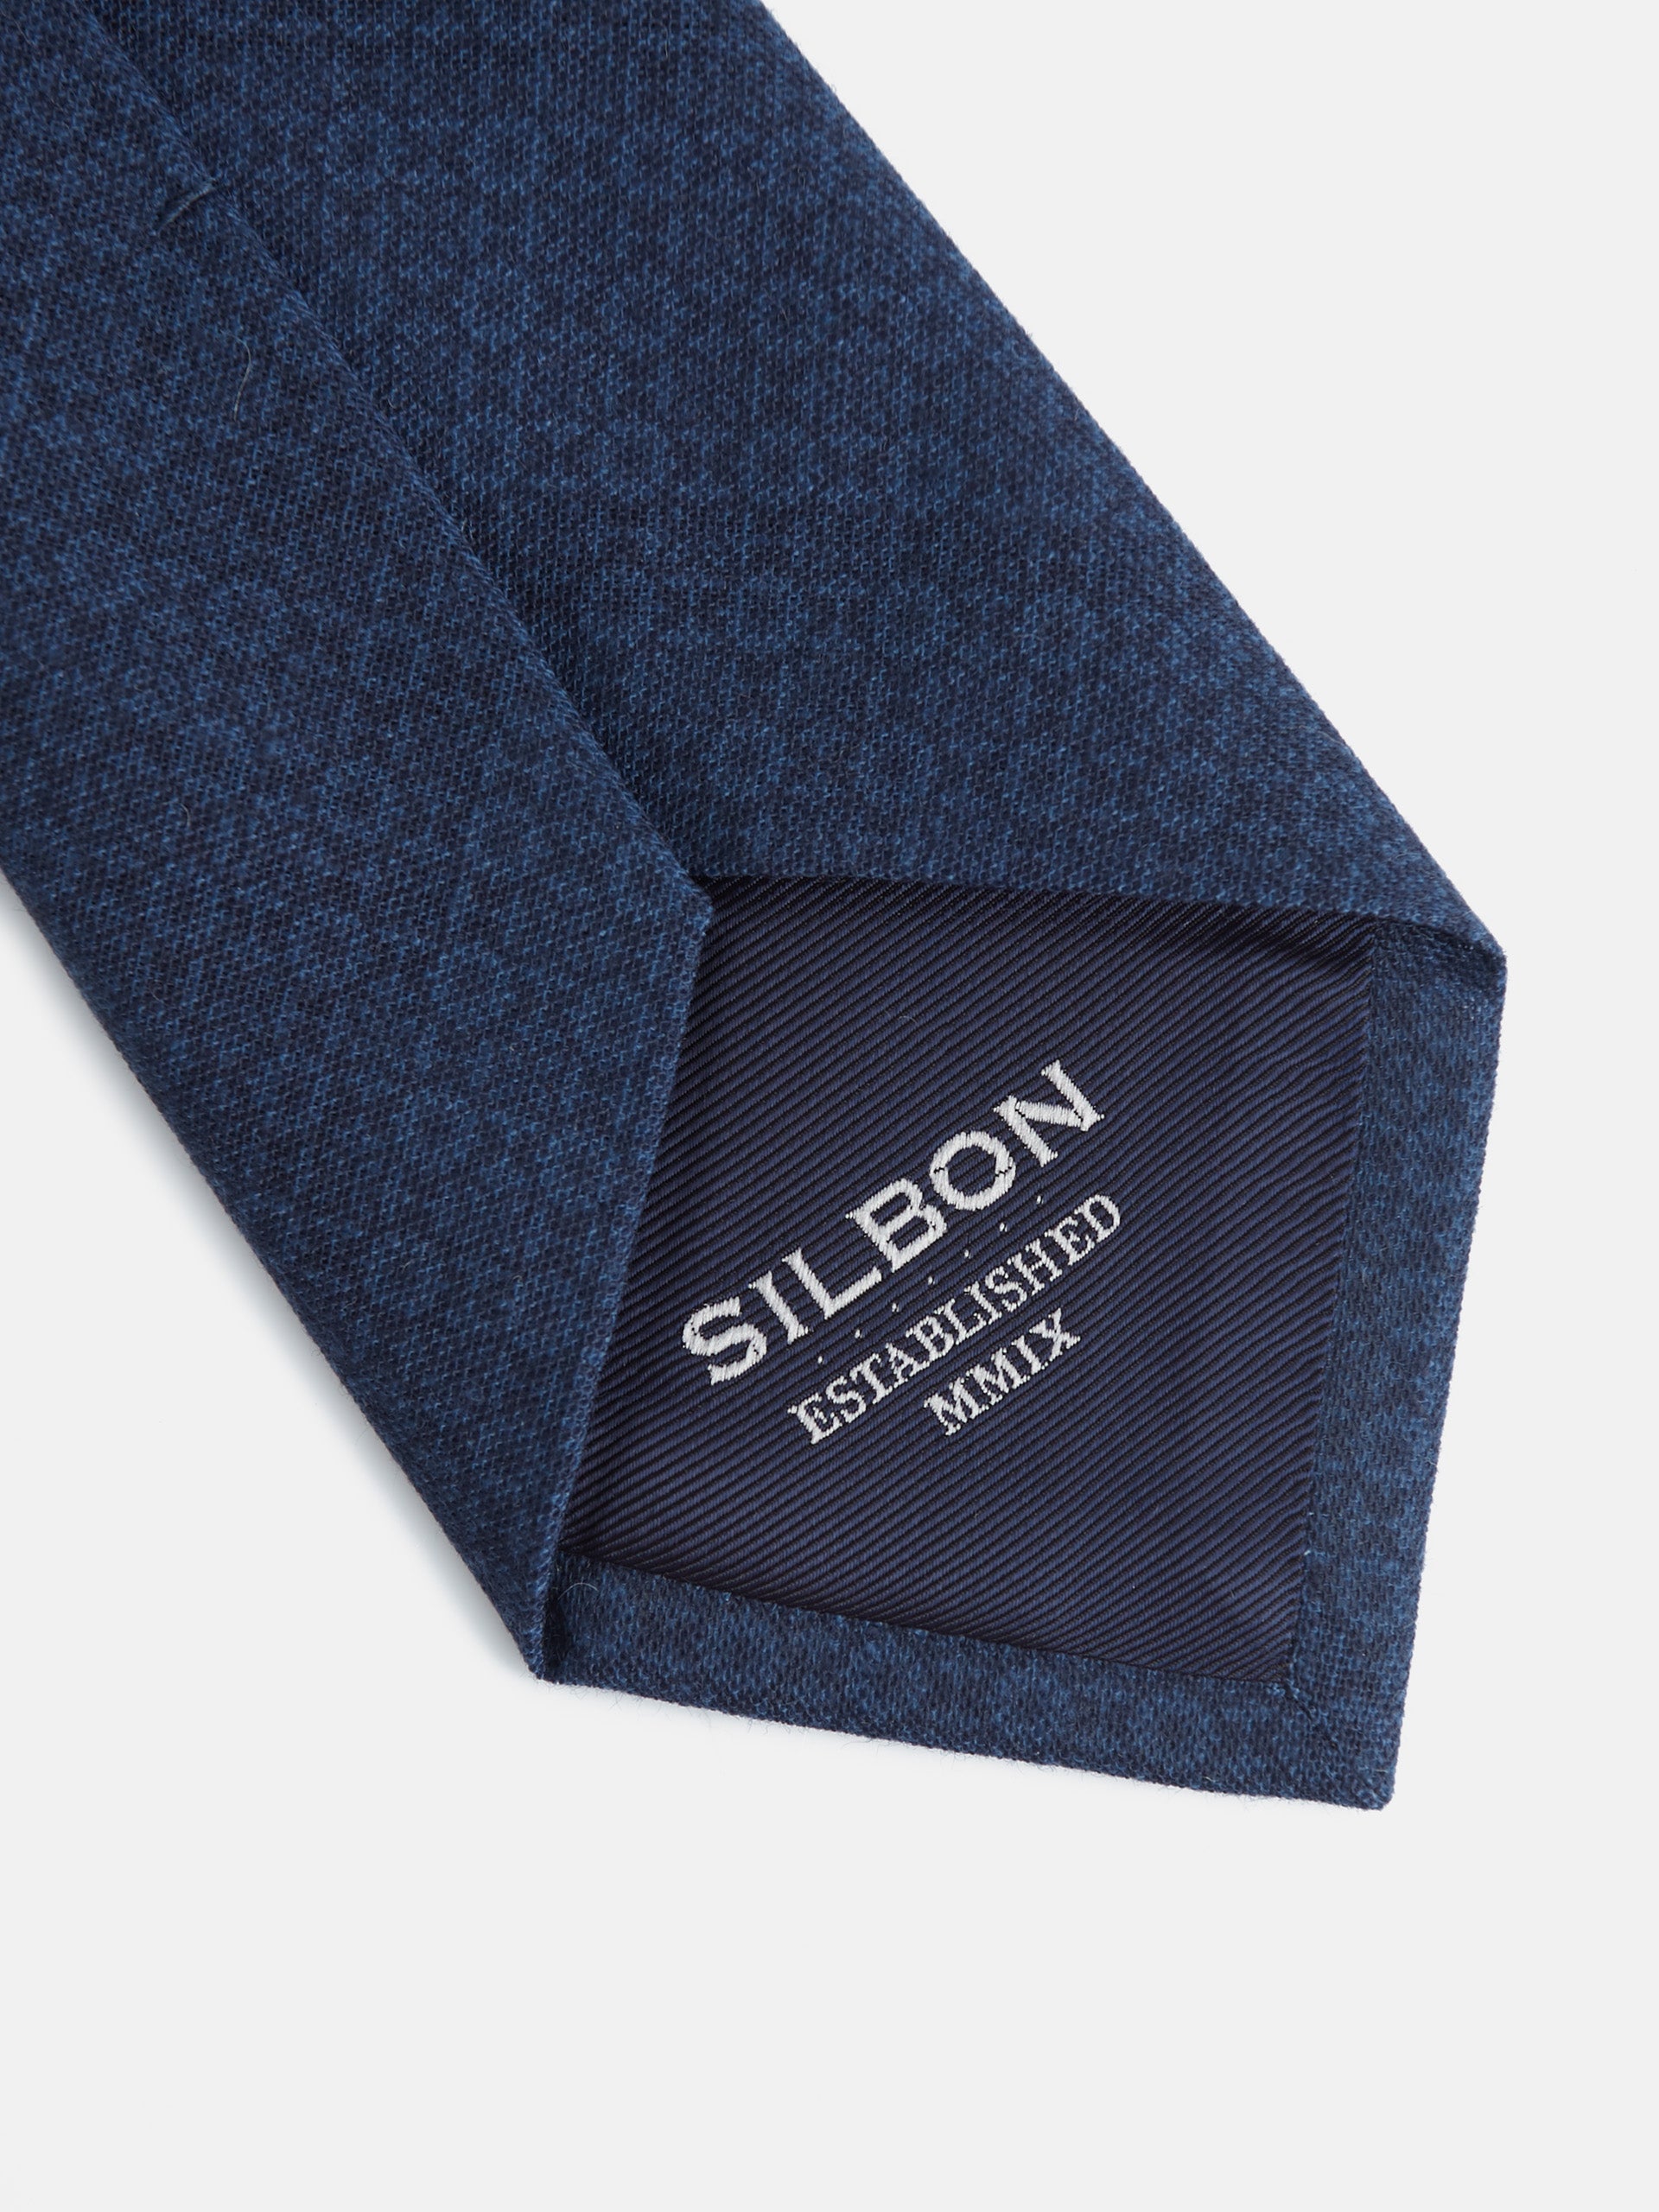 Asti tie with blue motifs